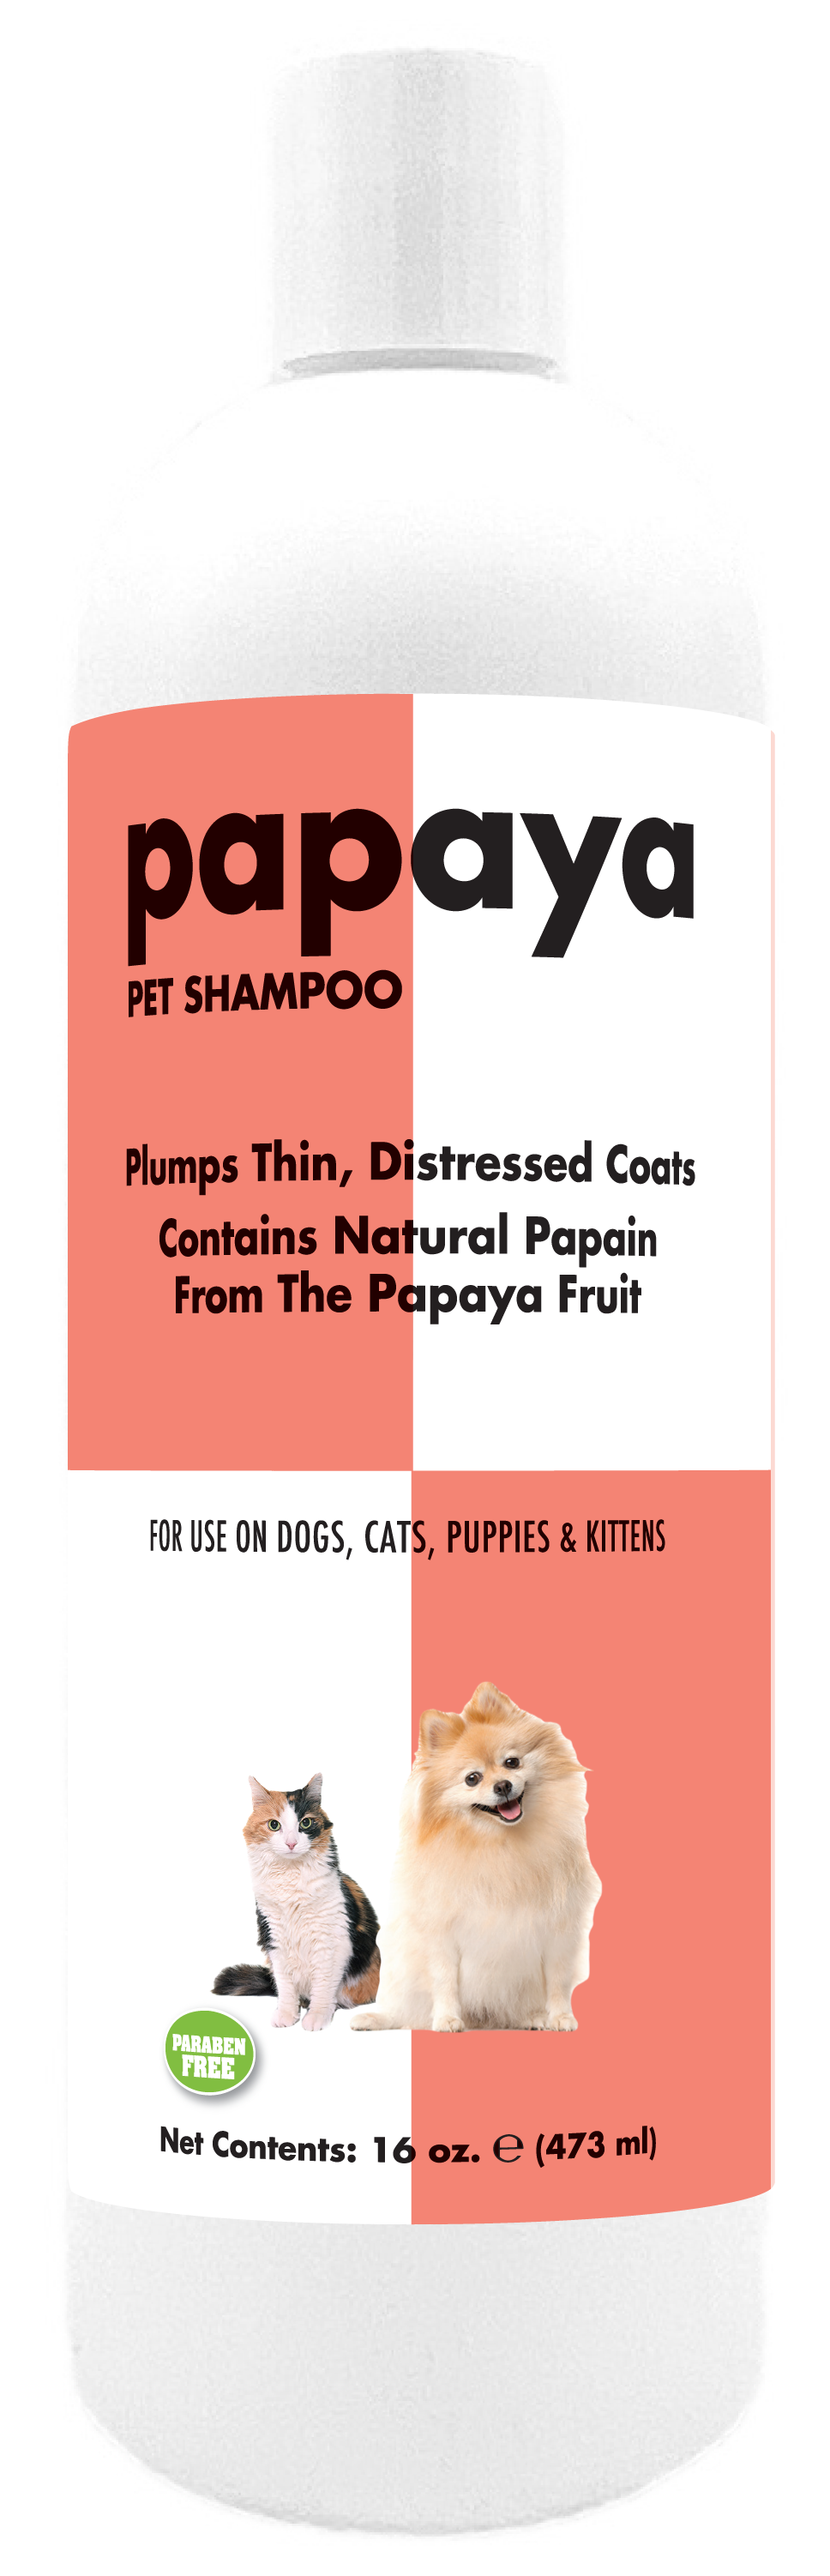 Papaya Pet Shampoo